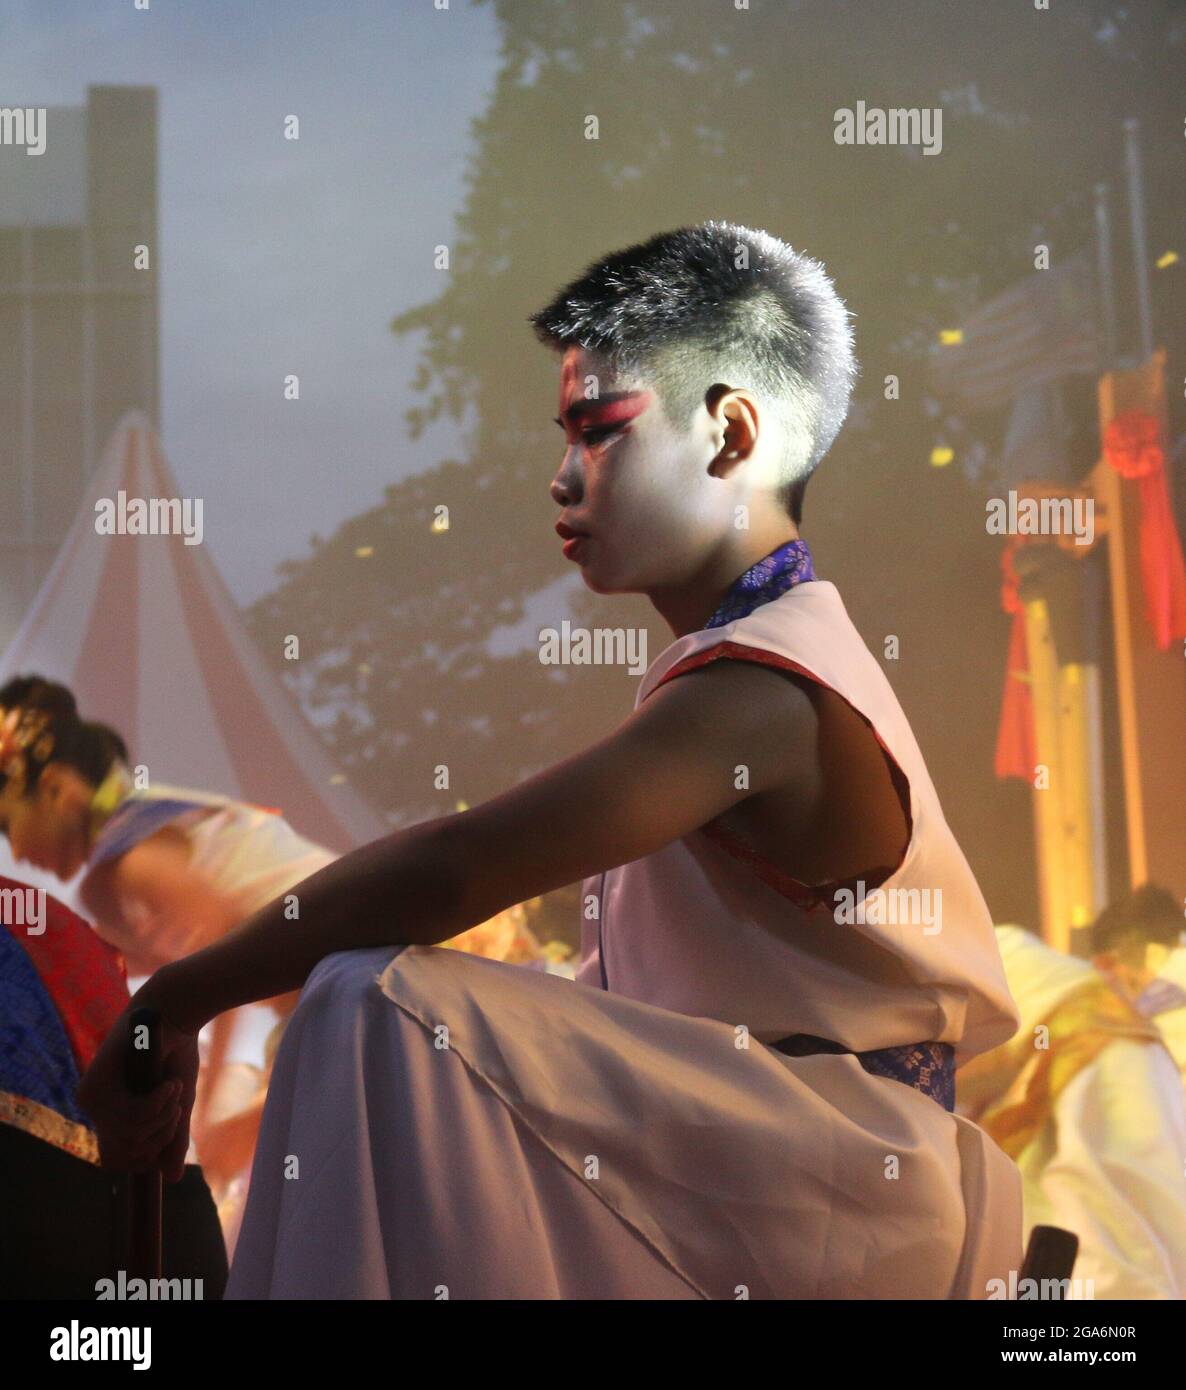 GEORGETOWN, MALAYSIA - 02. Februar 2020: Junge Performerin, die sich am 2. Februar 20 bei einem Kulturfestival in George Town, Penang, Malaysia, auf die Bühne hocken Stockfoto